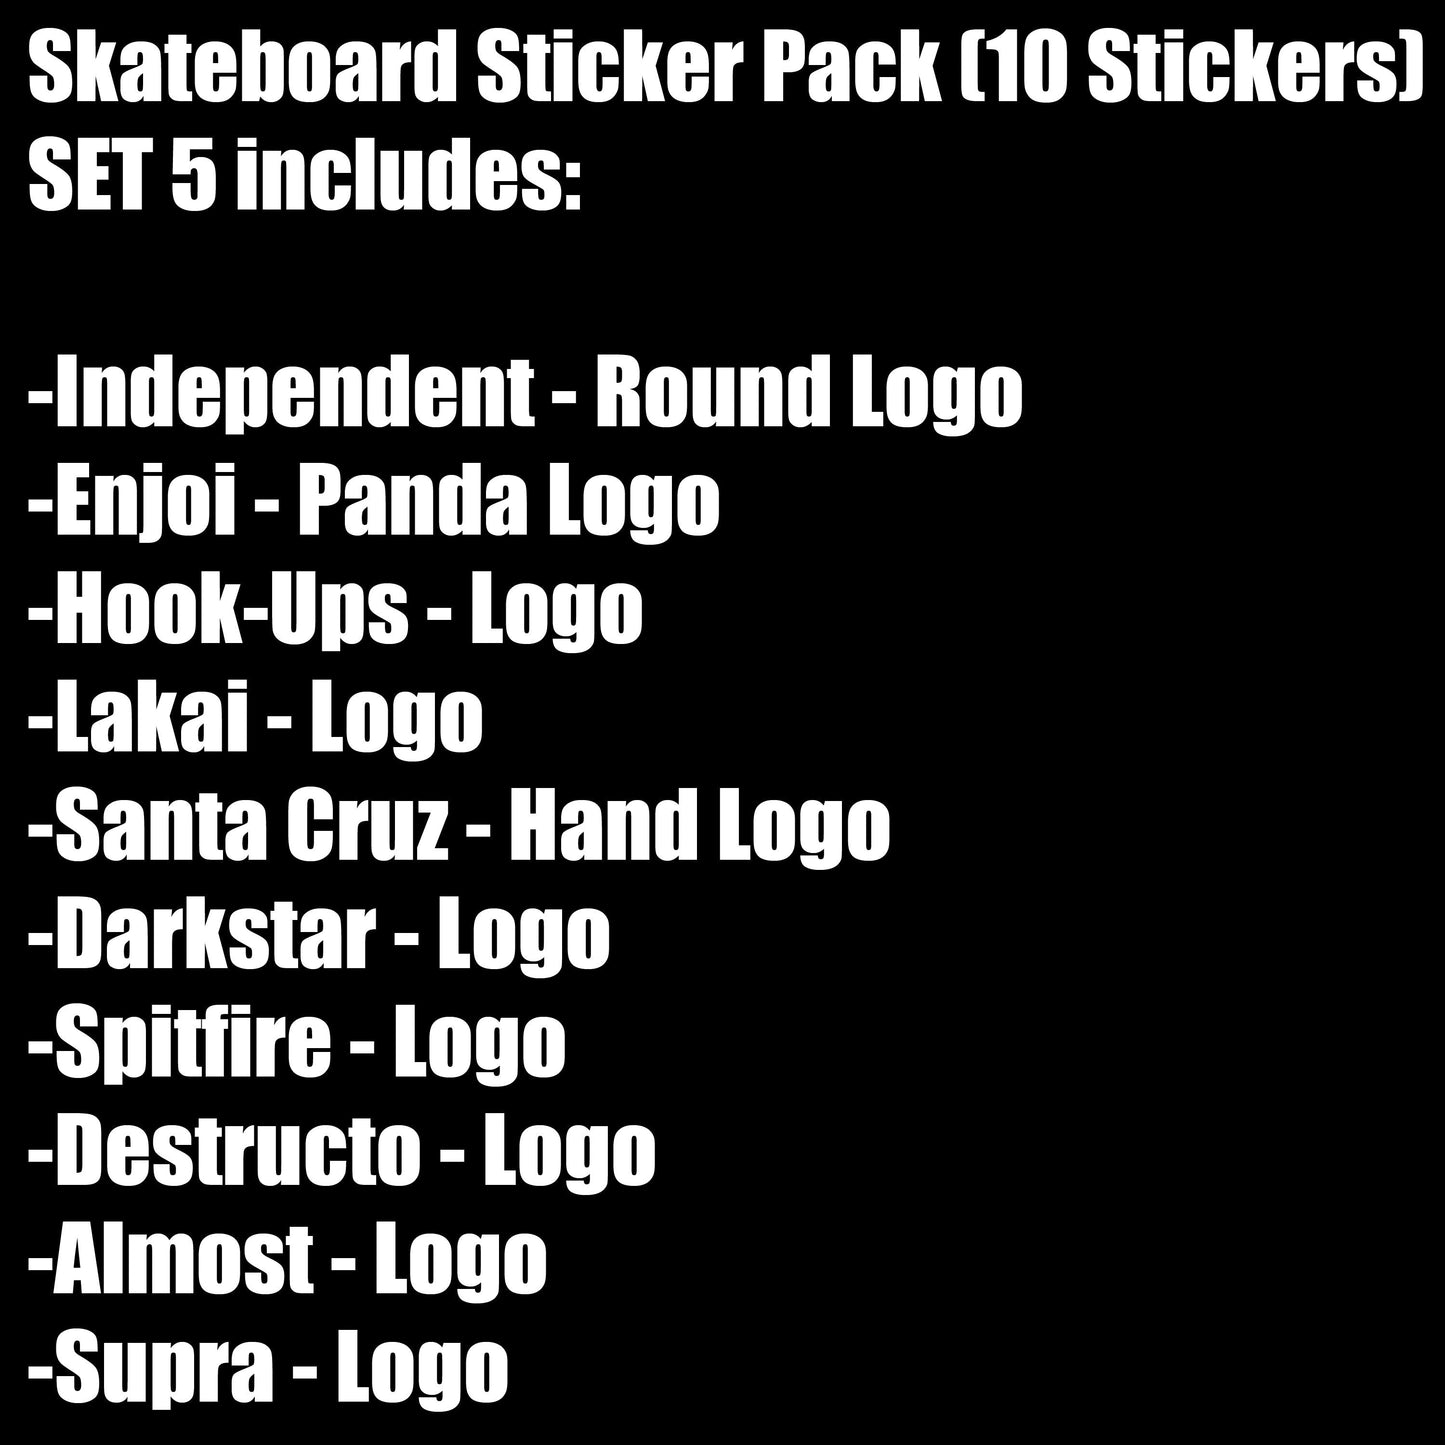 Skateboard Sticker Pack (10 Stickers) SET 5